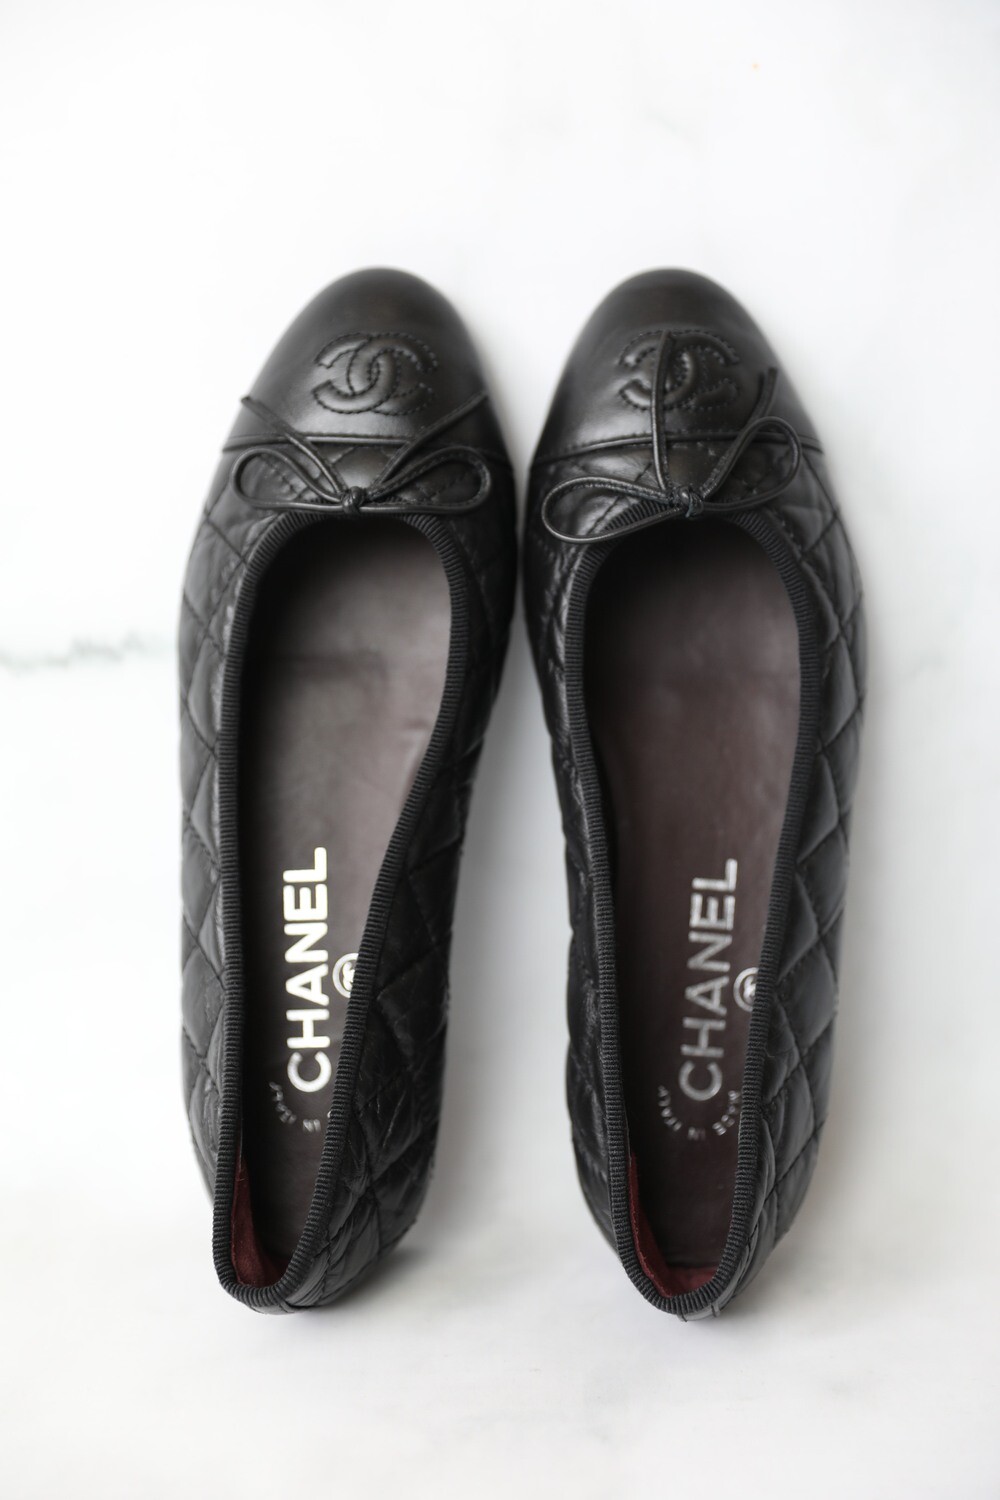 Chanel Ballet Flats, Black Calfskin, Size 37.5, New in Box WA001